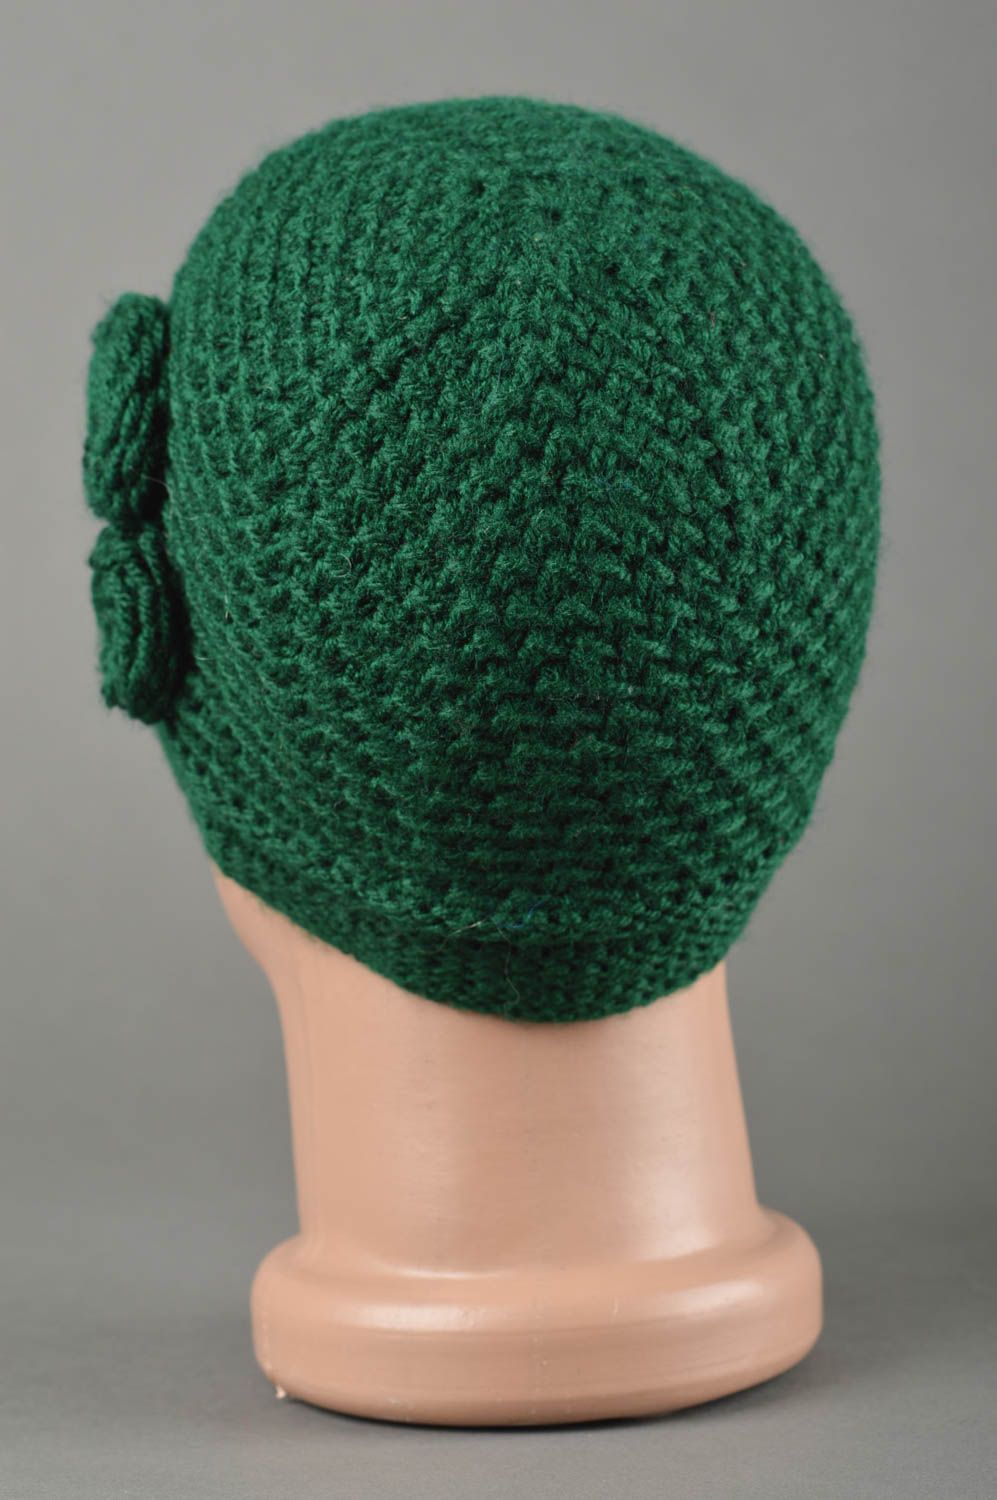 Handmade crochet hat winter hat crochet hats for kids accessories for girls photo 2